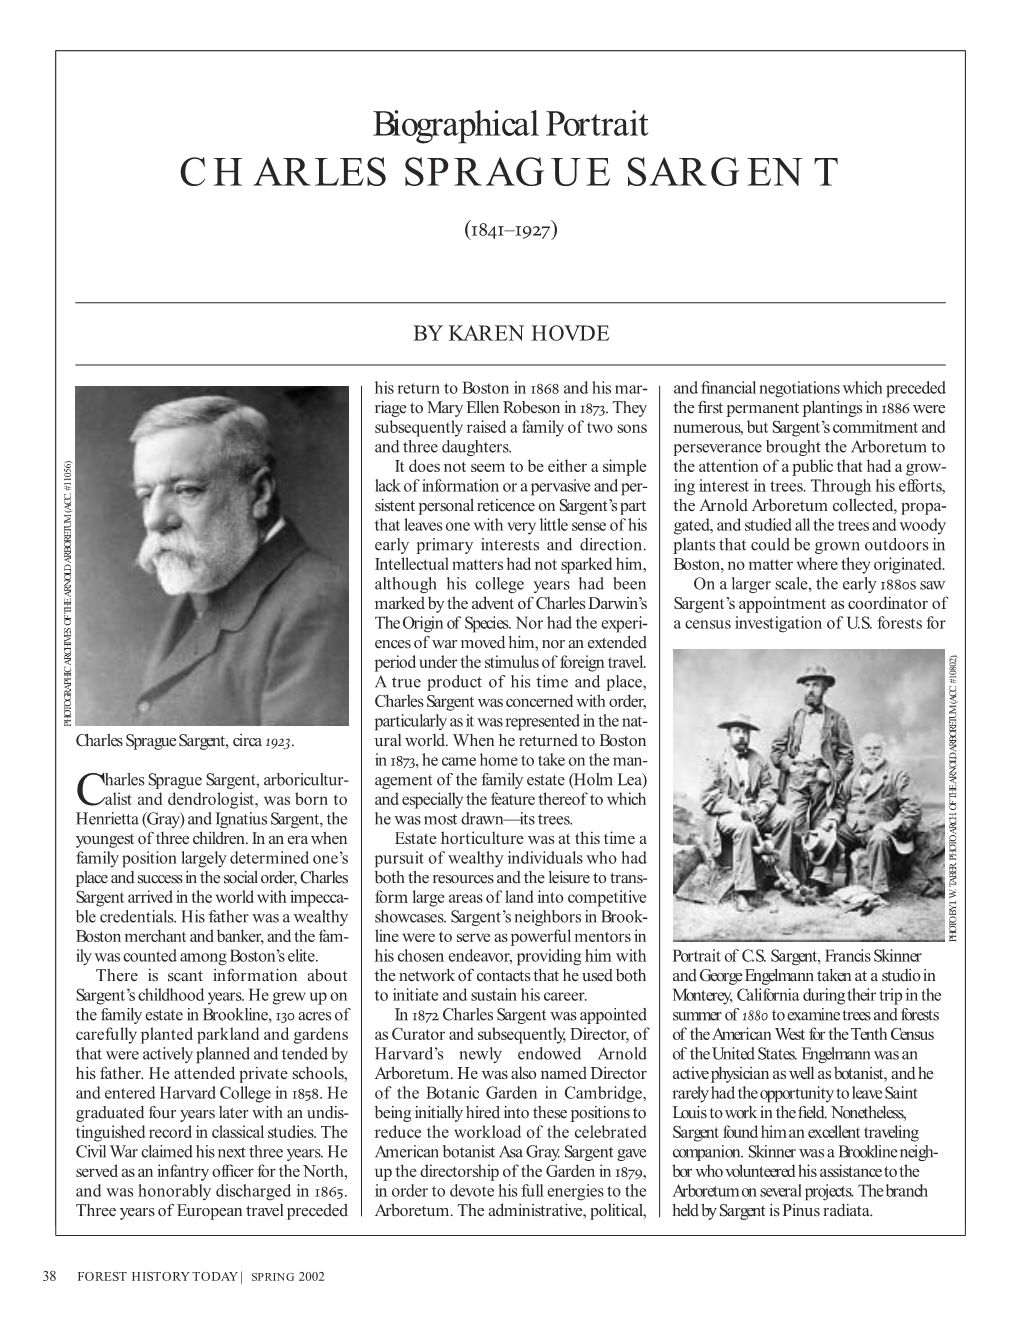 Charles Sprague Sargent